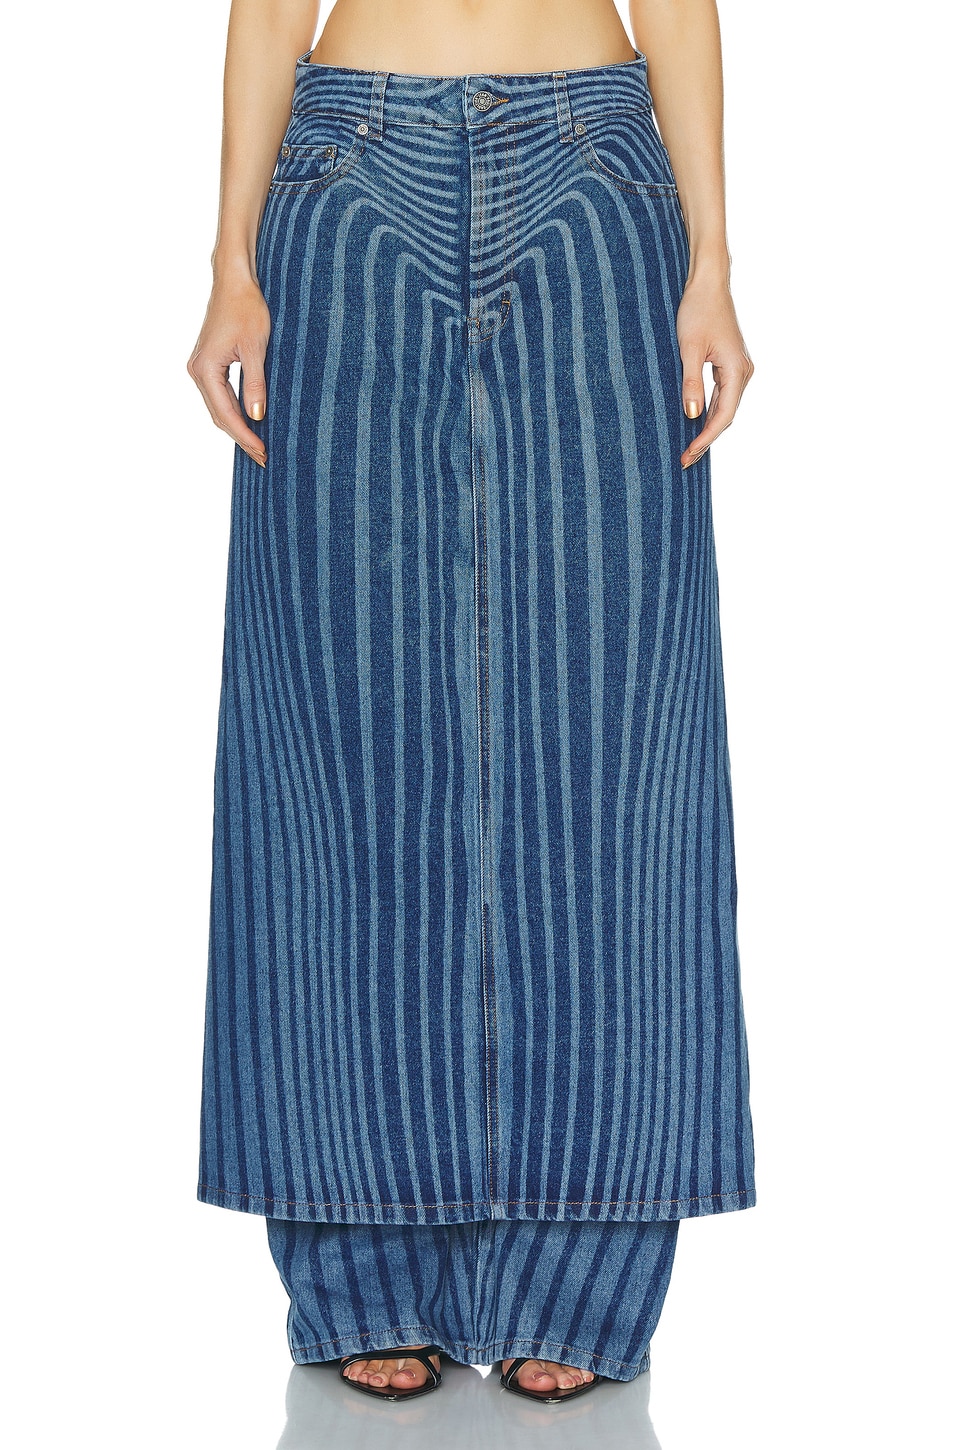 Image 1 of Jean Paul Gaultier Body Morphing Laser Print Denim Skirt Pant in Vintage Blue